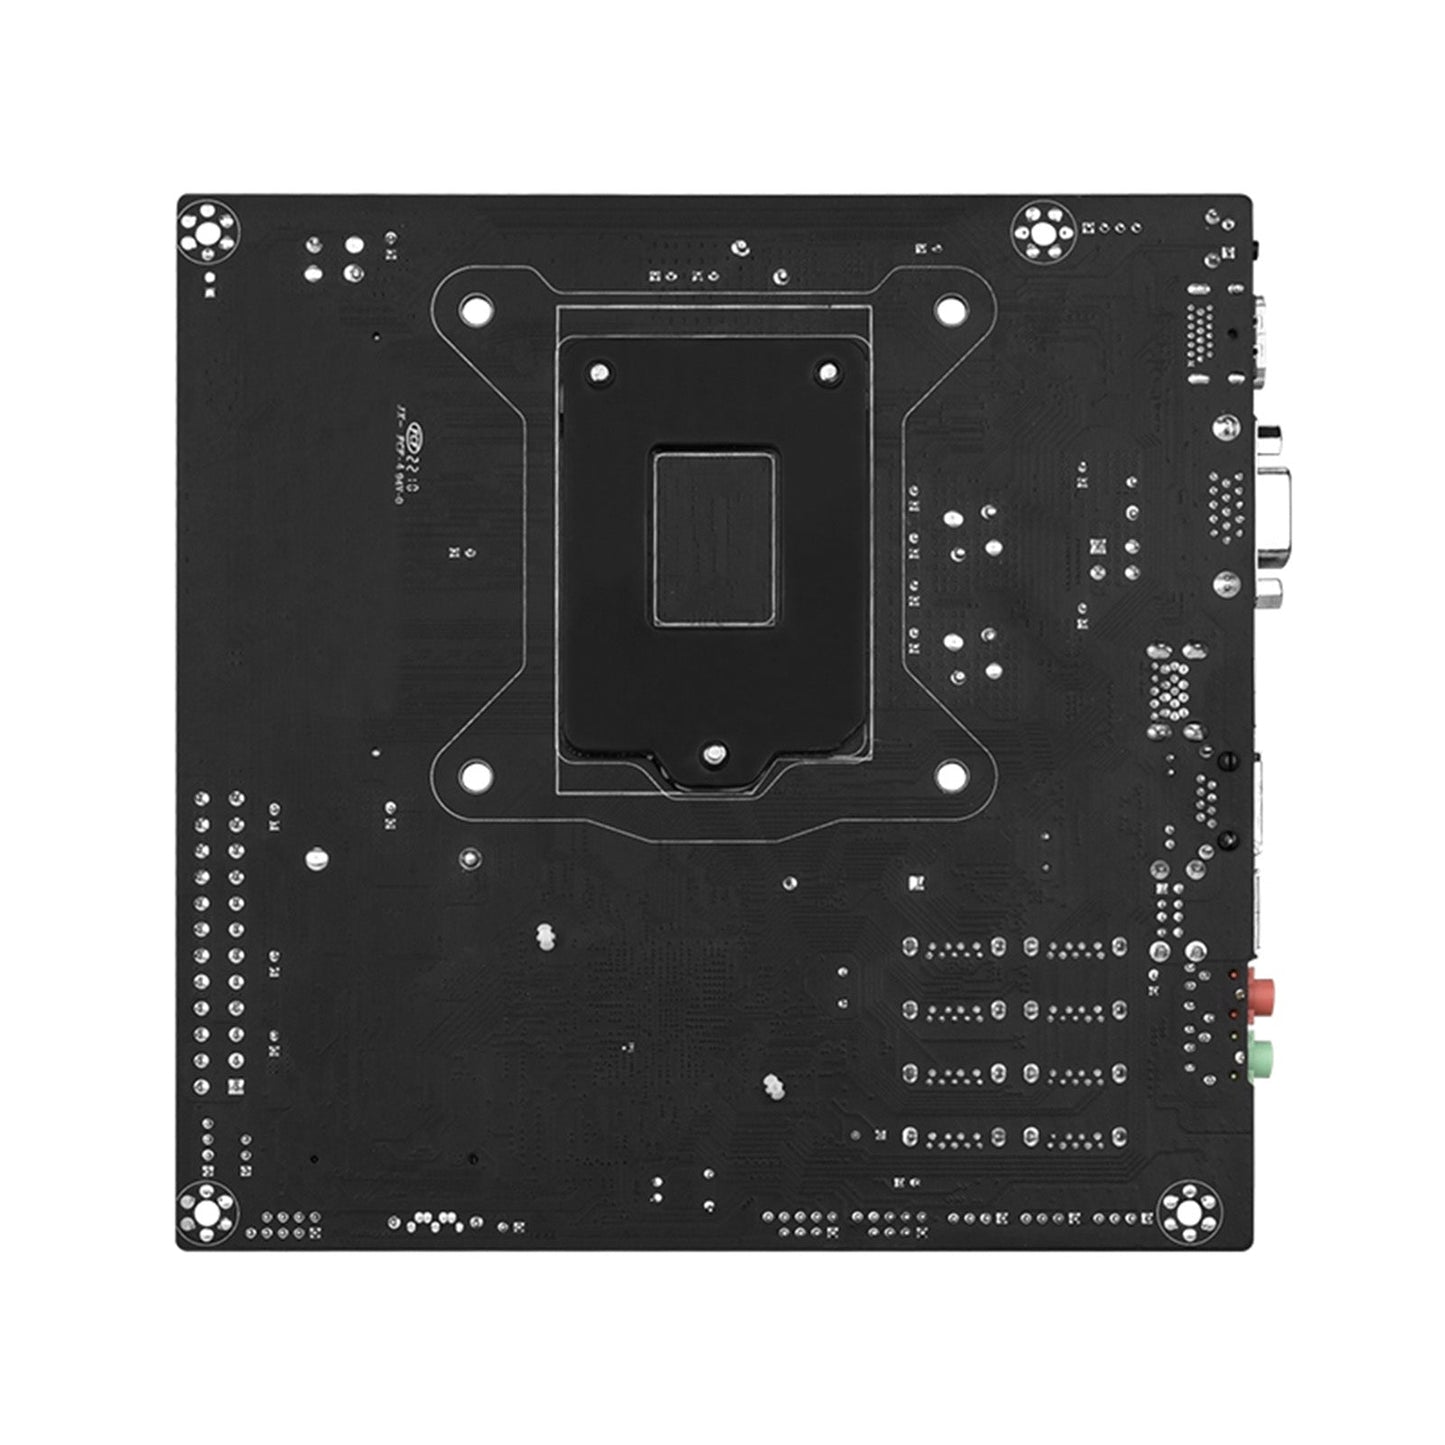 Mining Motherboard CPU DDR3 memory Slot Riserless 8*USB Mining Expert Board